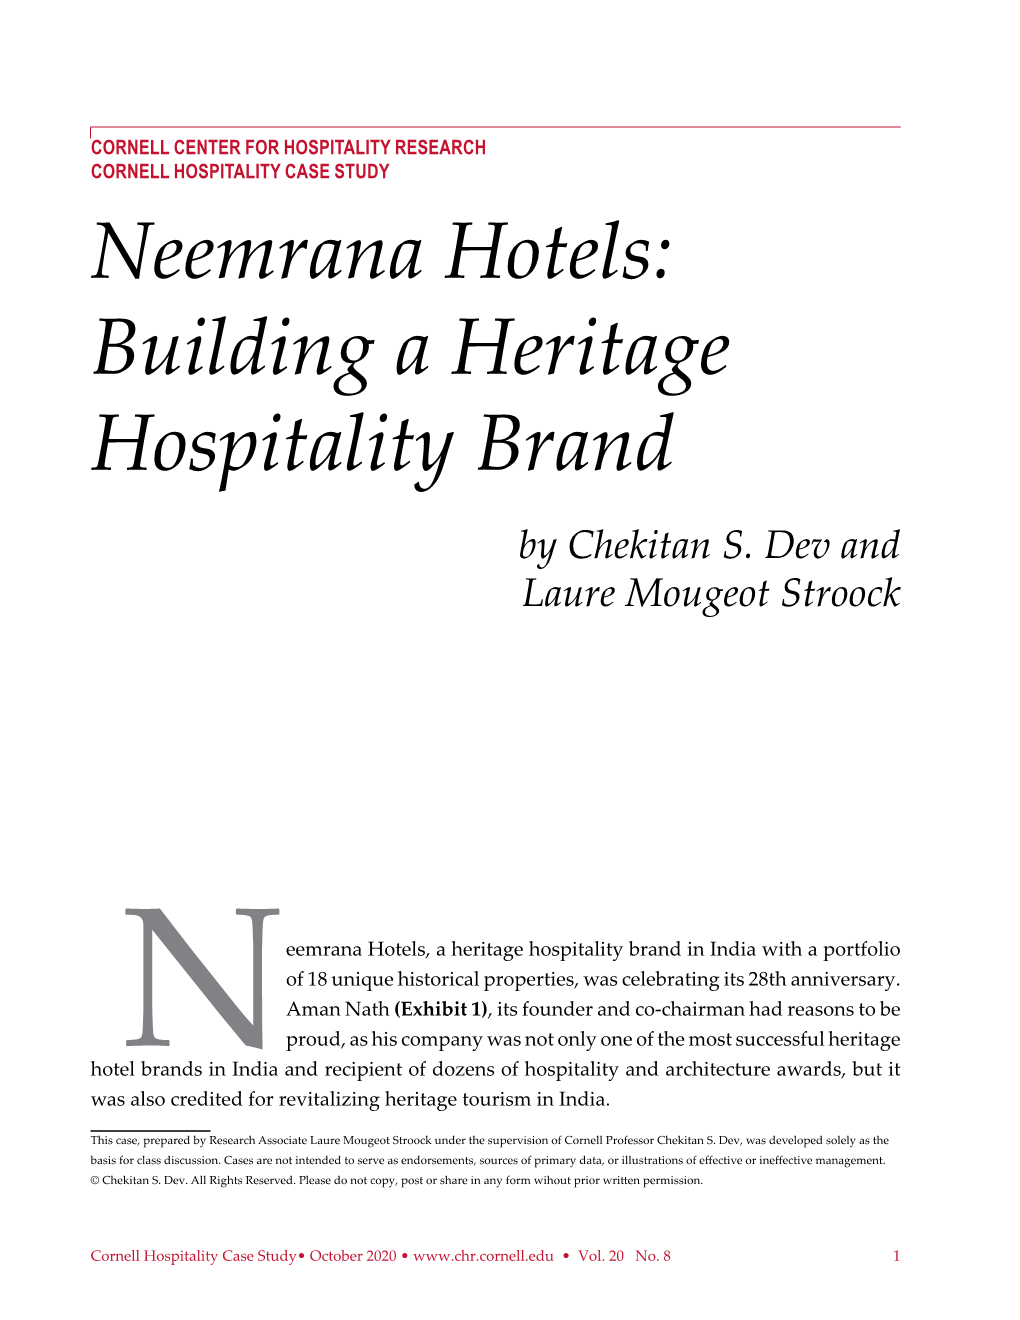 Neemrana Hotels Building a Heritage Hospitality Brand.Pdf (1.448Mb)